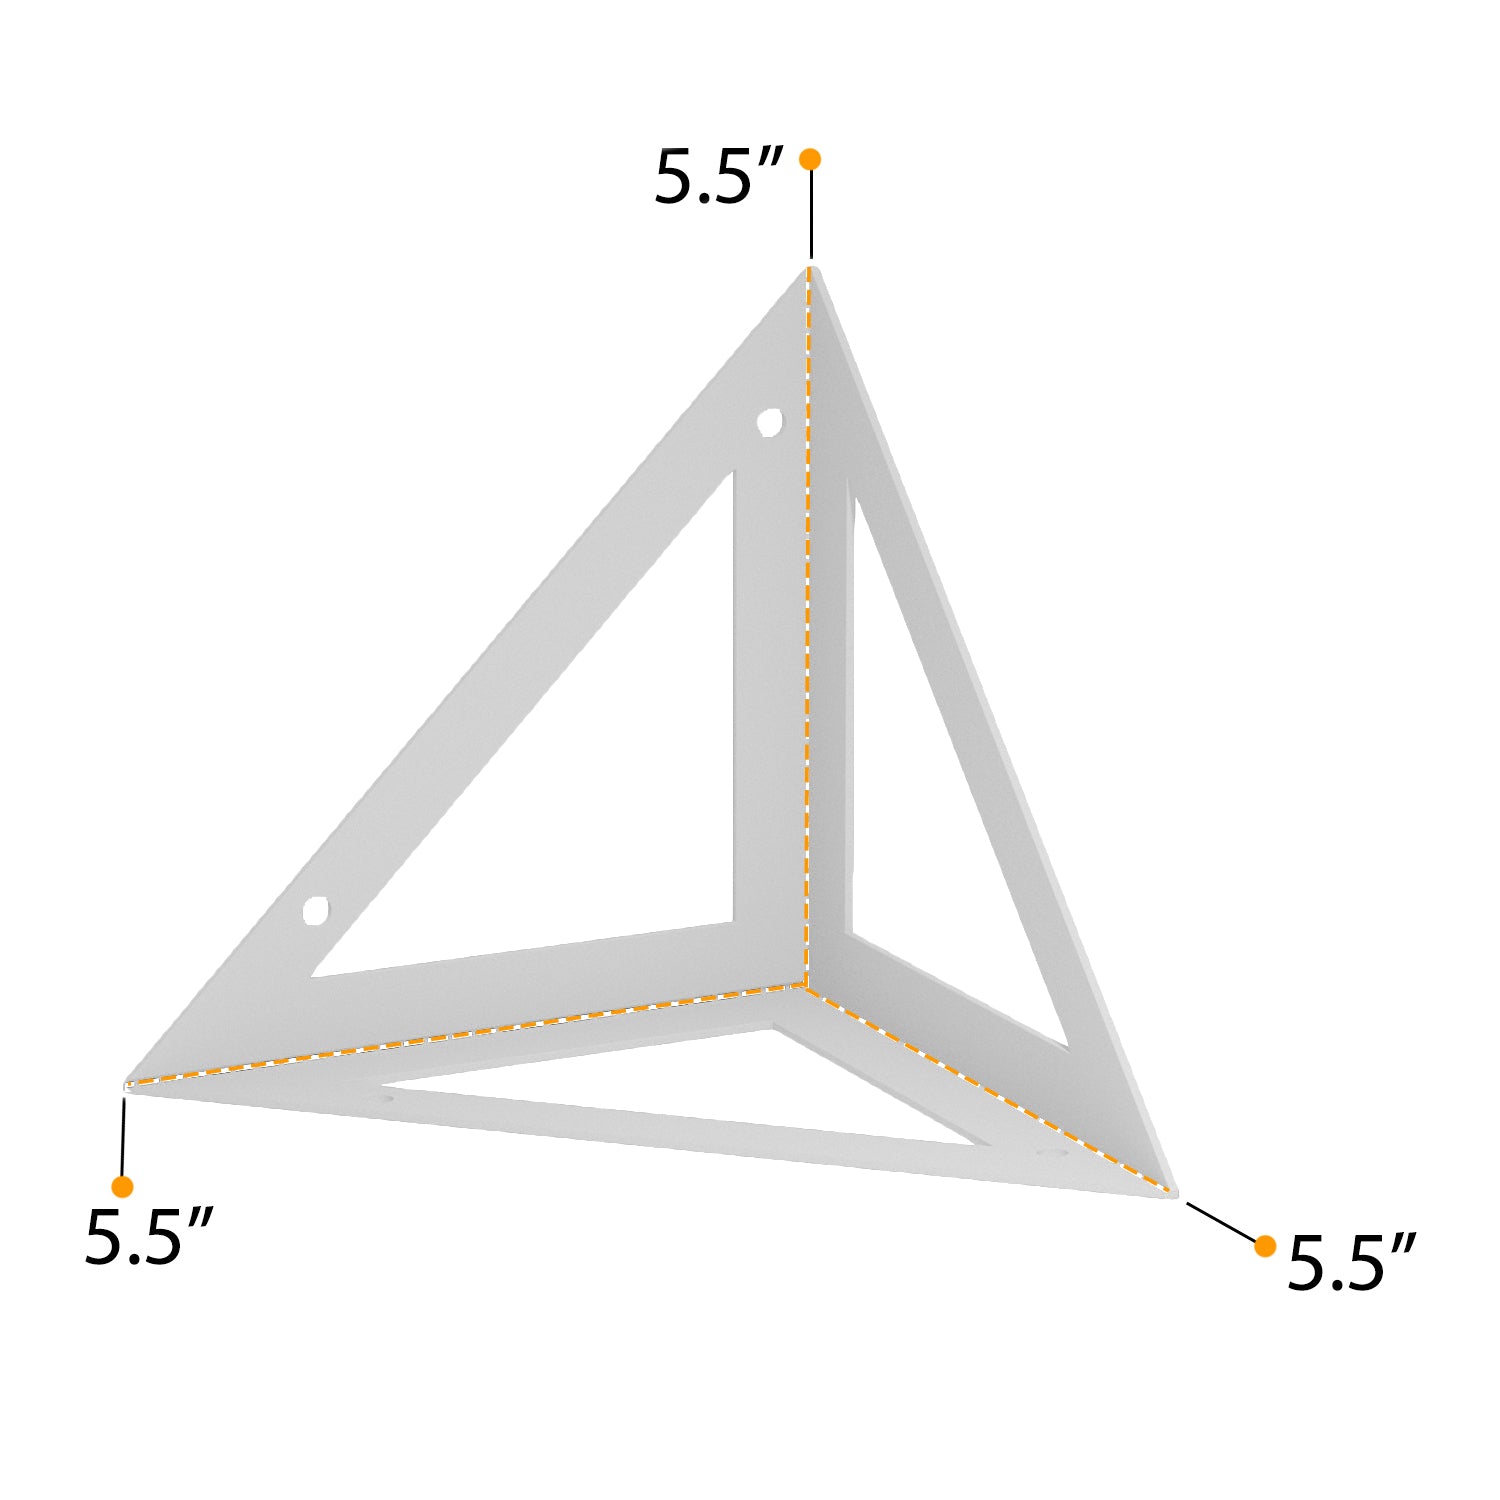 MINORI Geometric Triangle Shelf Brackets for Floating Shelves, Wall Shelves Brackets for Rustic Decor - Set of 2 - White - Wallniture